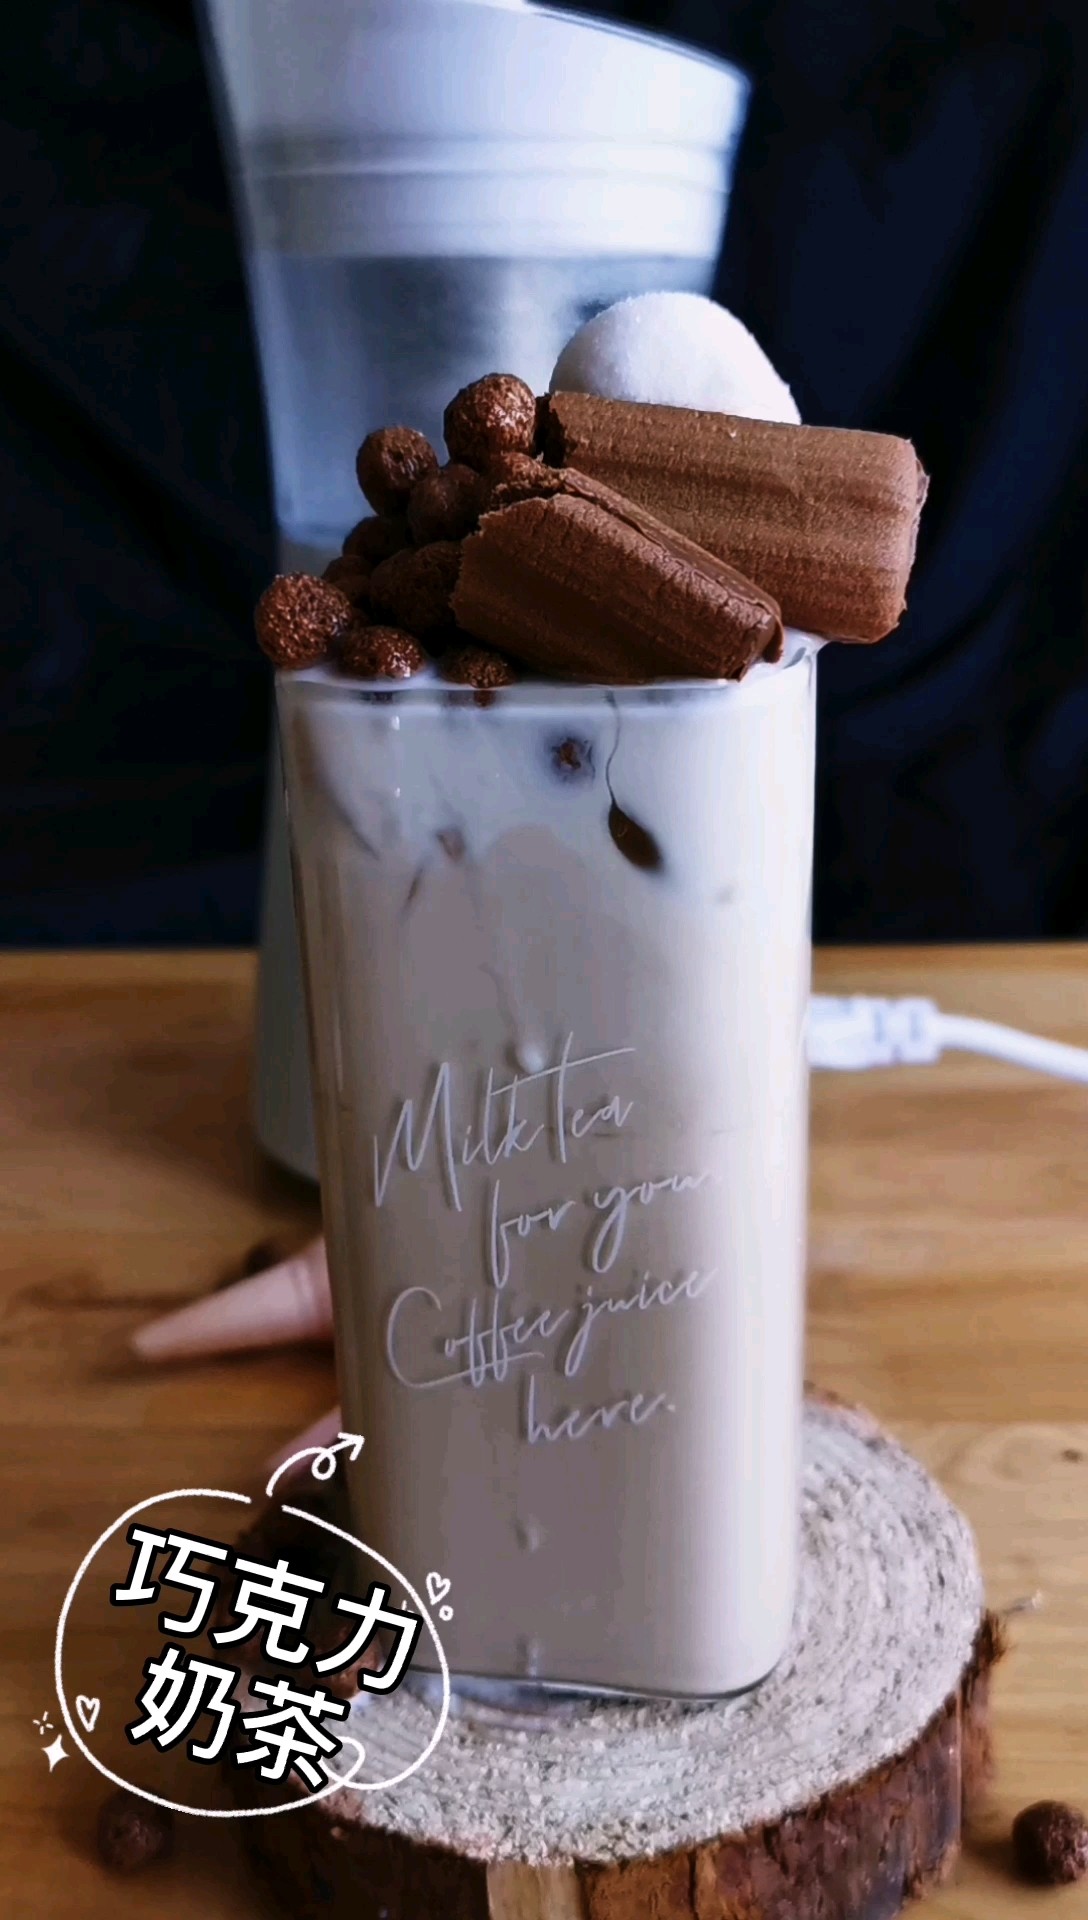 Chocolate Milk Tea recipe